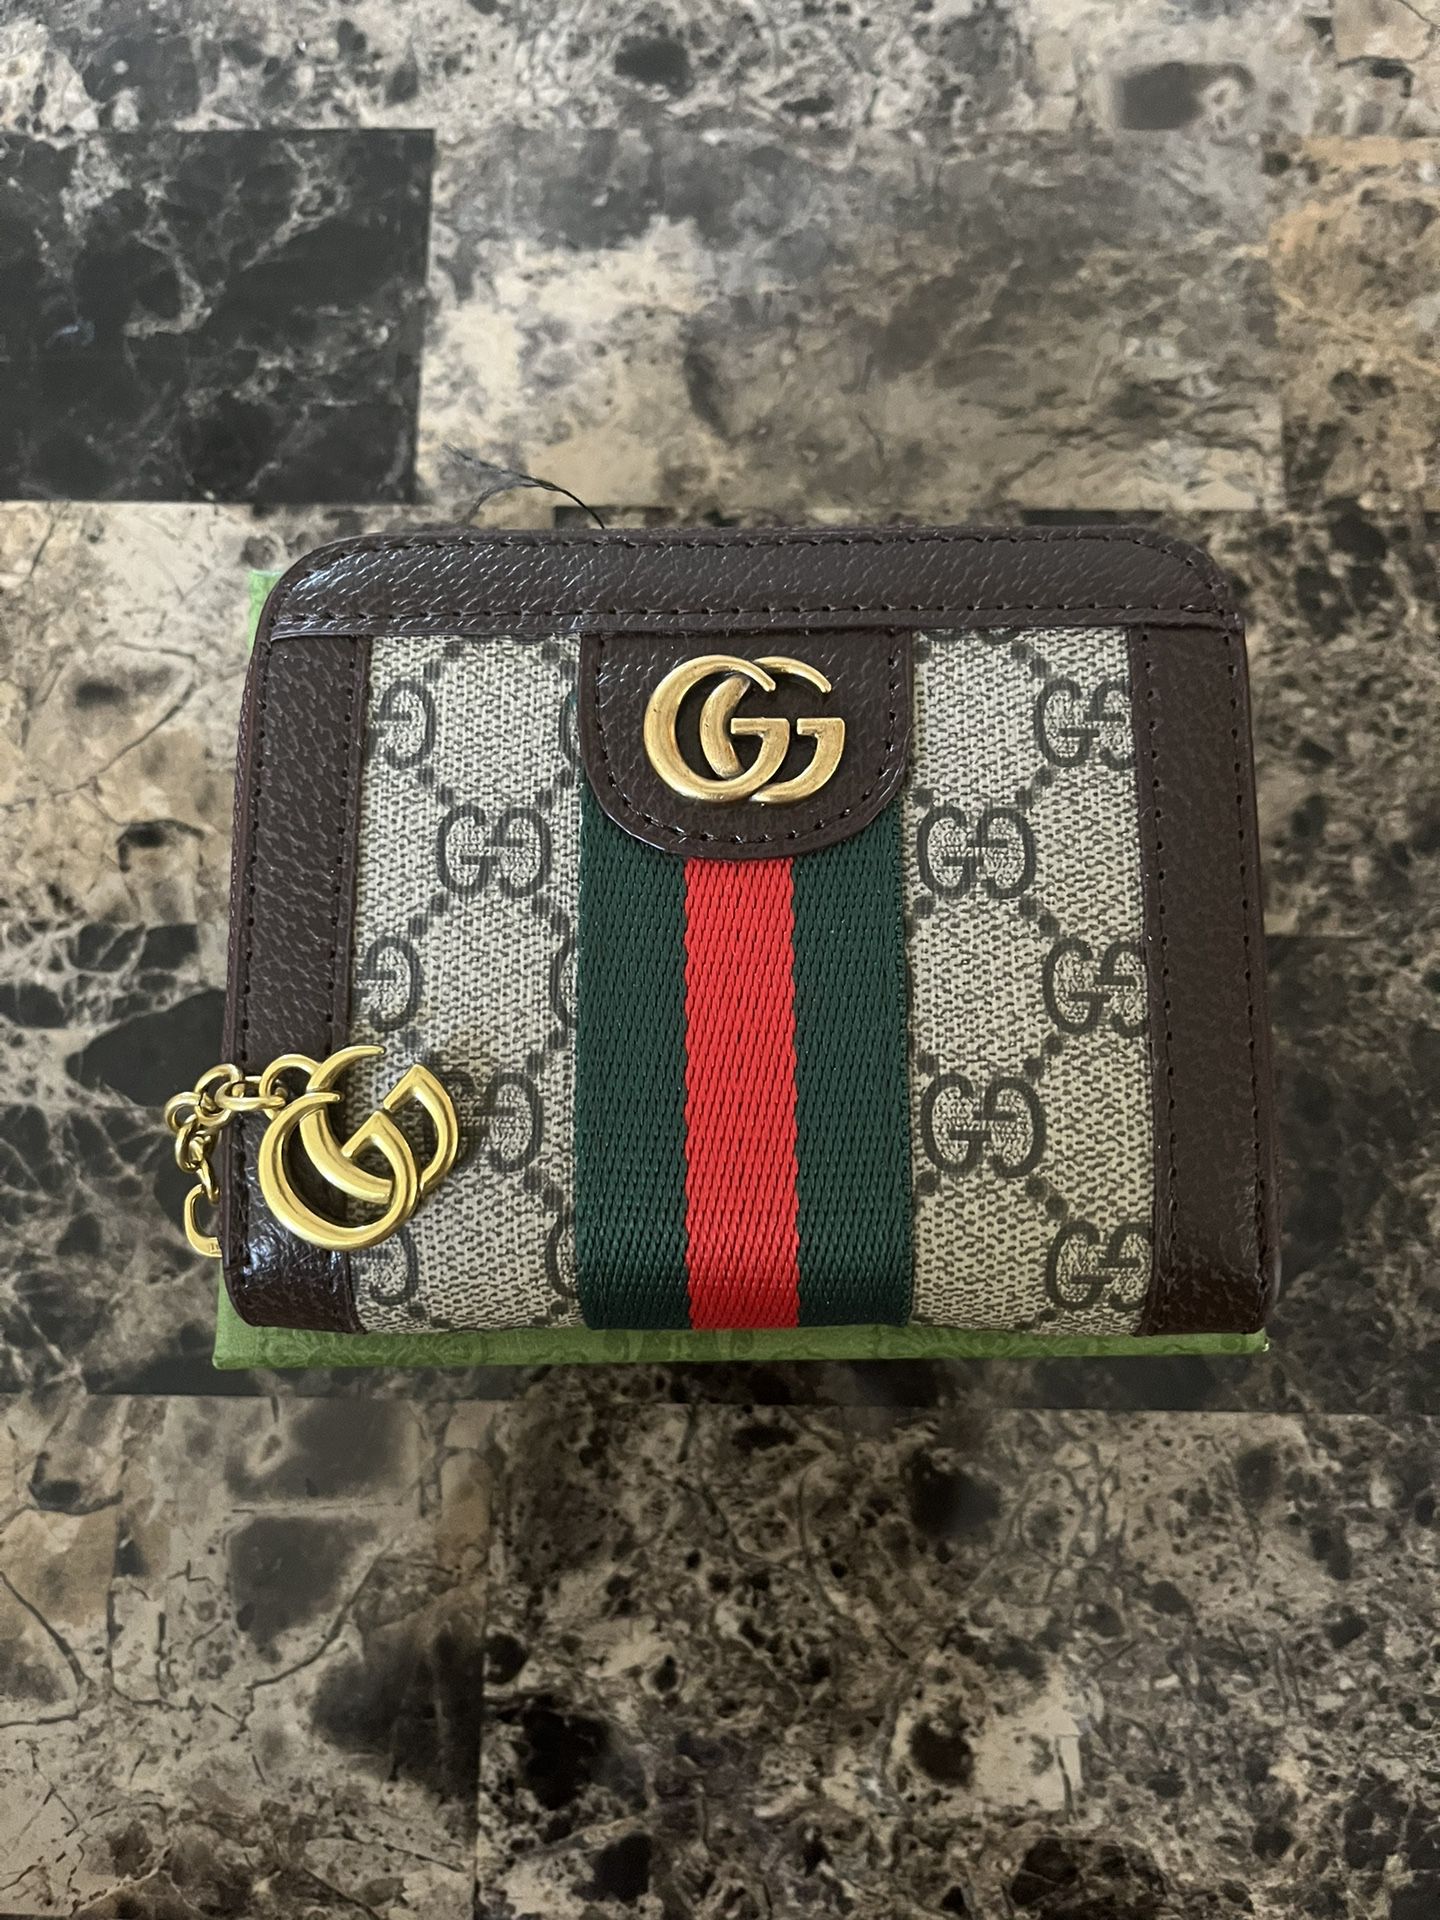 GG Wallet 